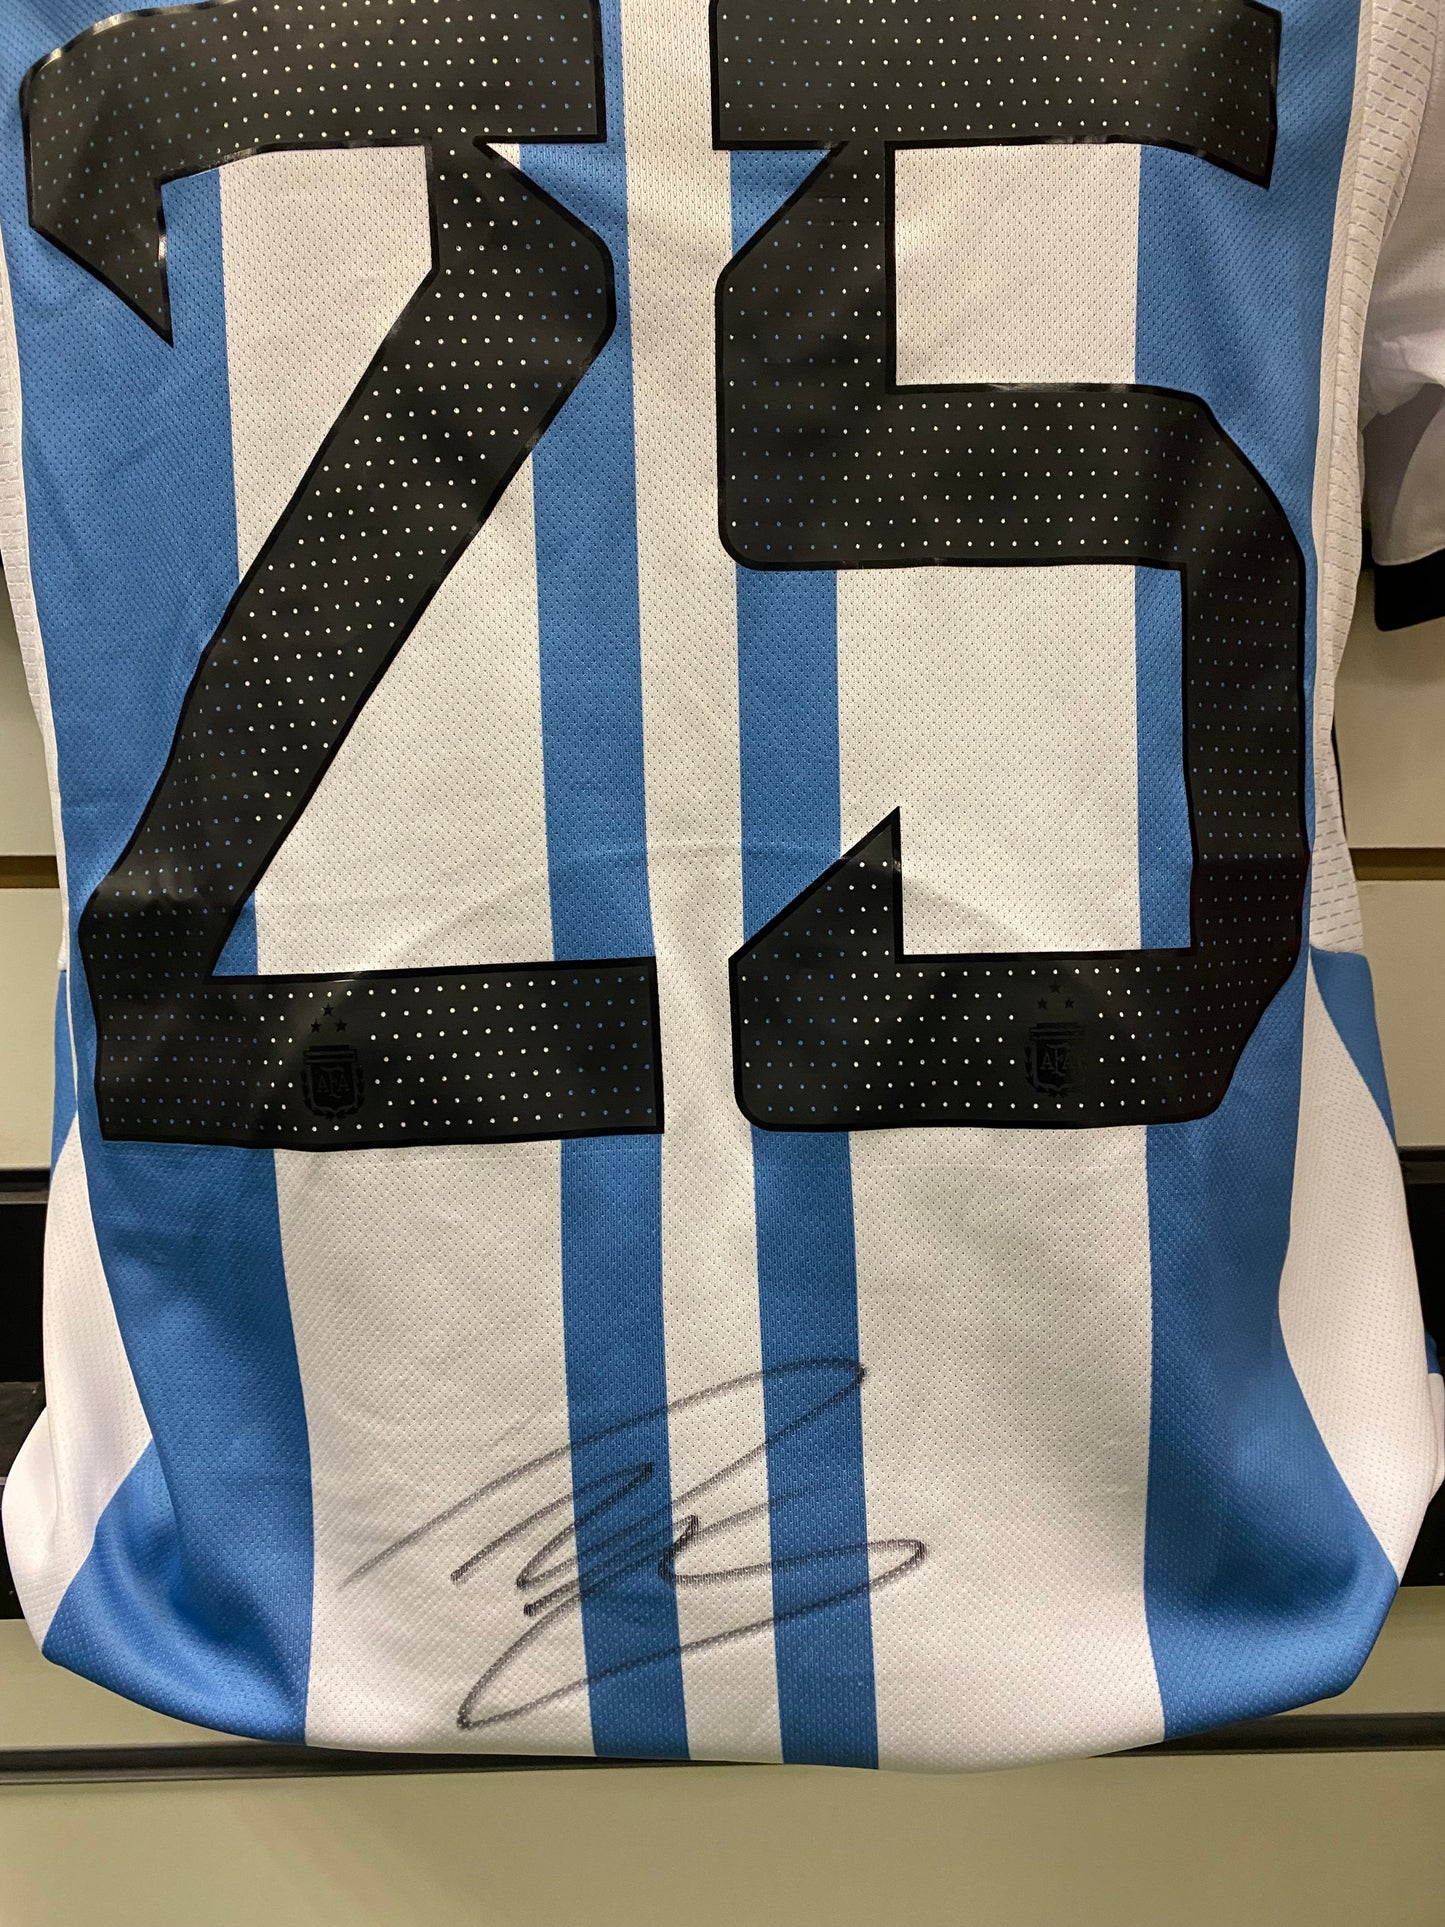 Lisandro Martinez - Argentina hand-signed replica shirt - world cup 2022 memorabilia, football shirt (UNFRAMED)